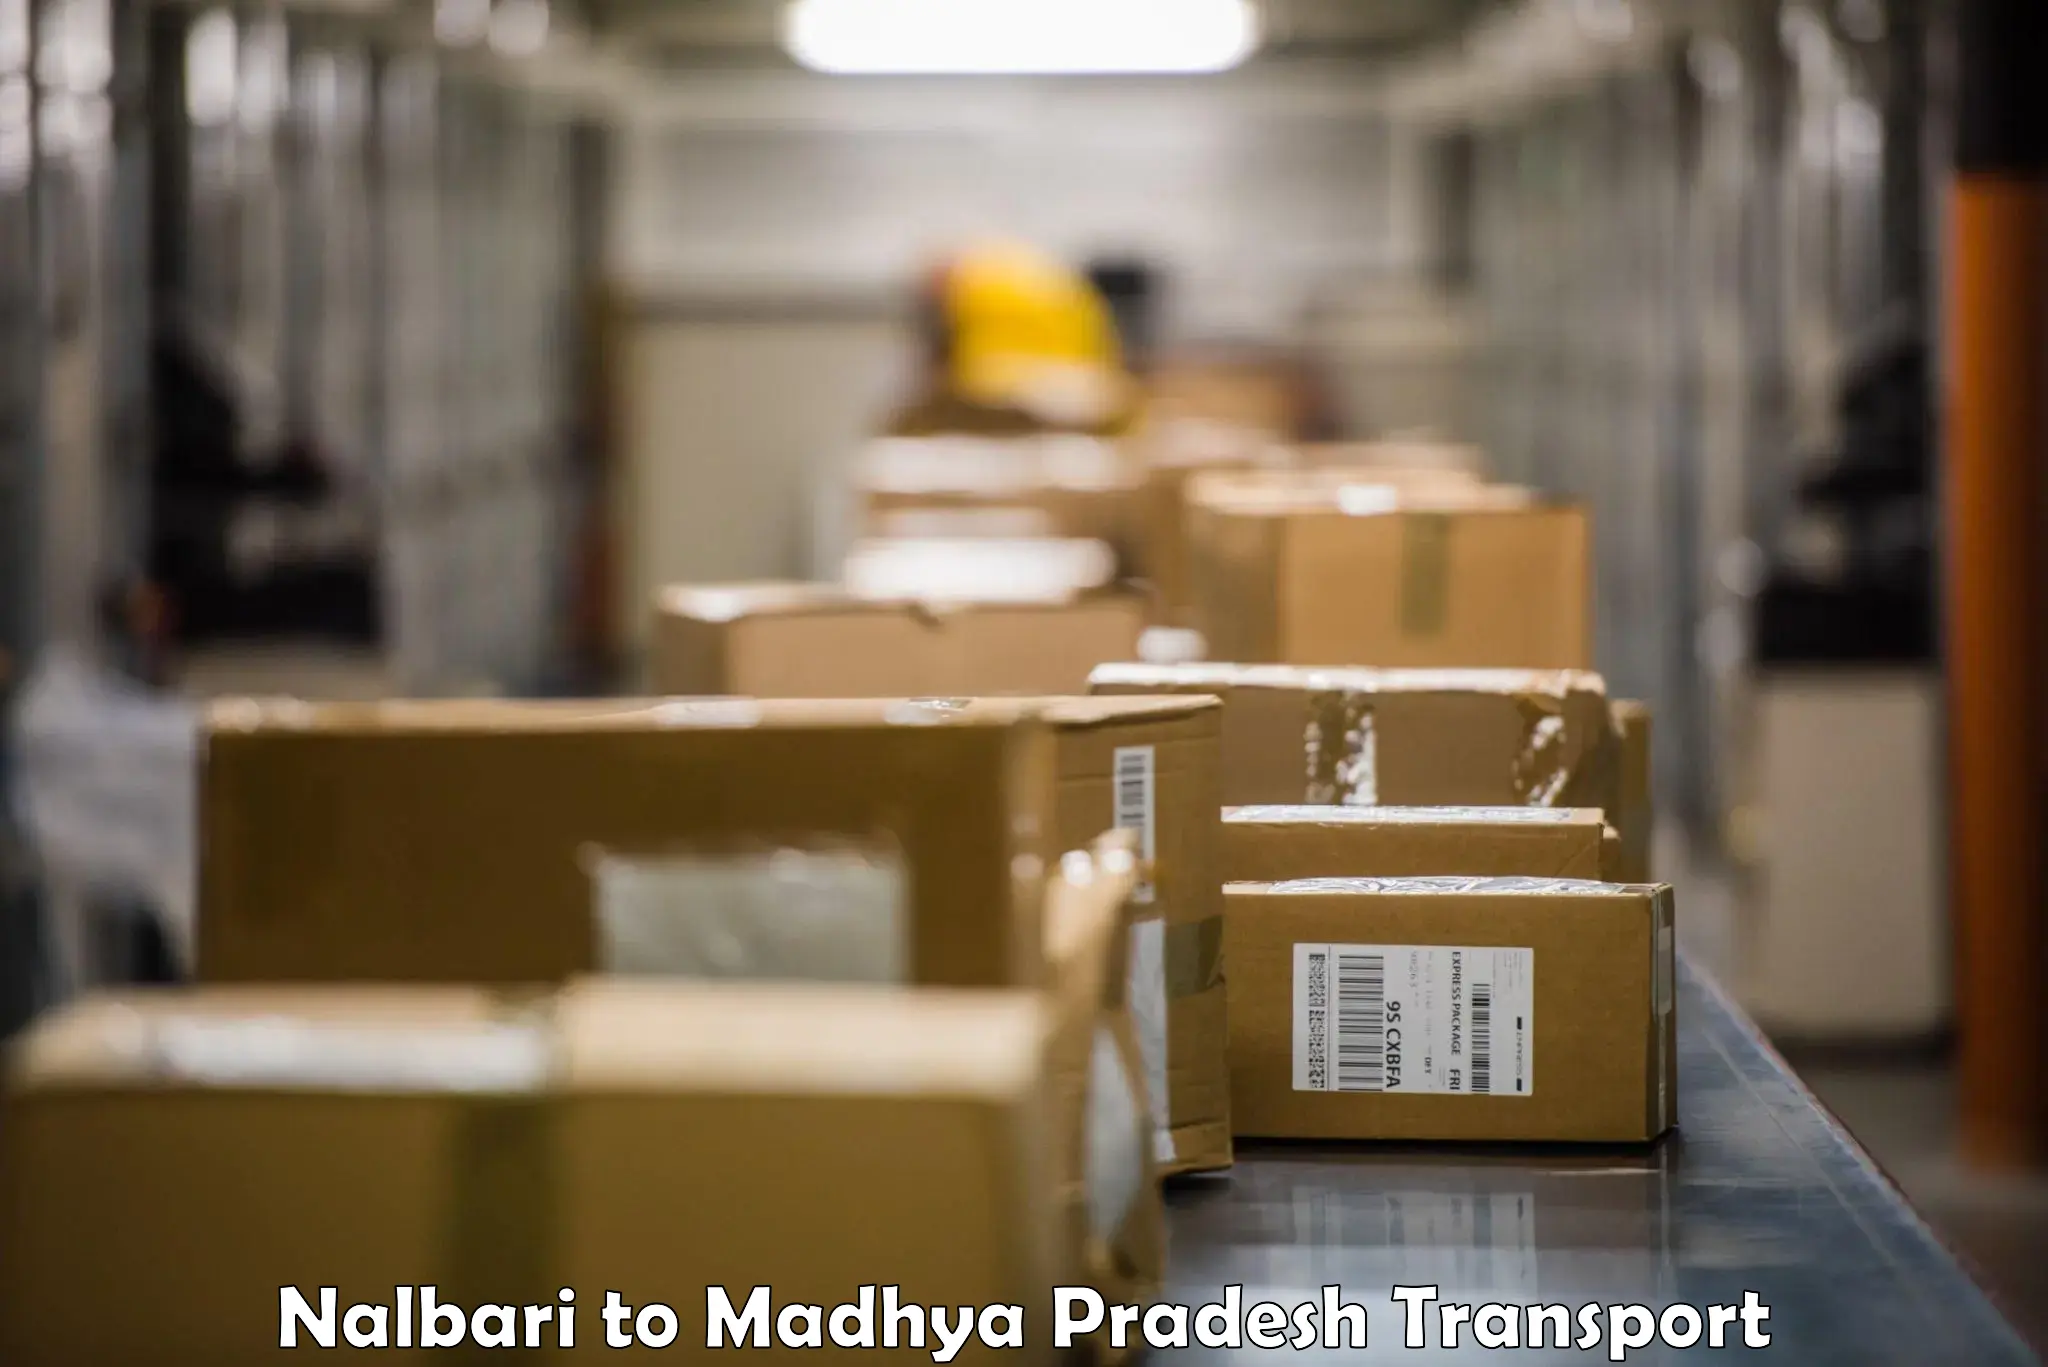 Goods delivery service Nalbari to Khargone